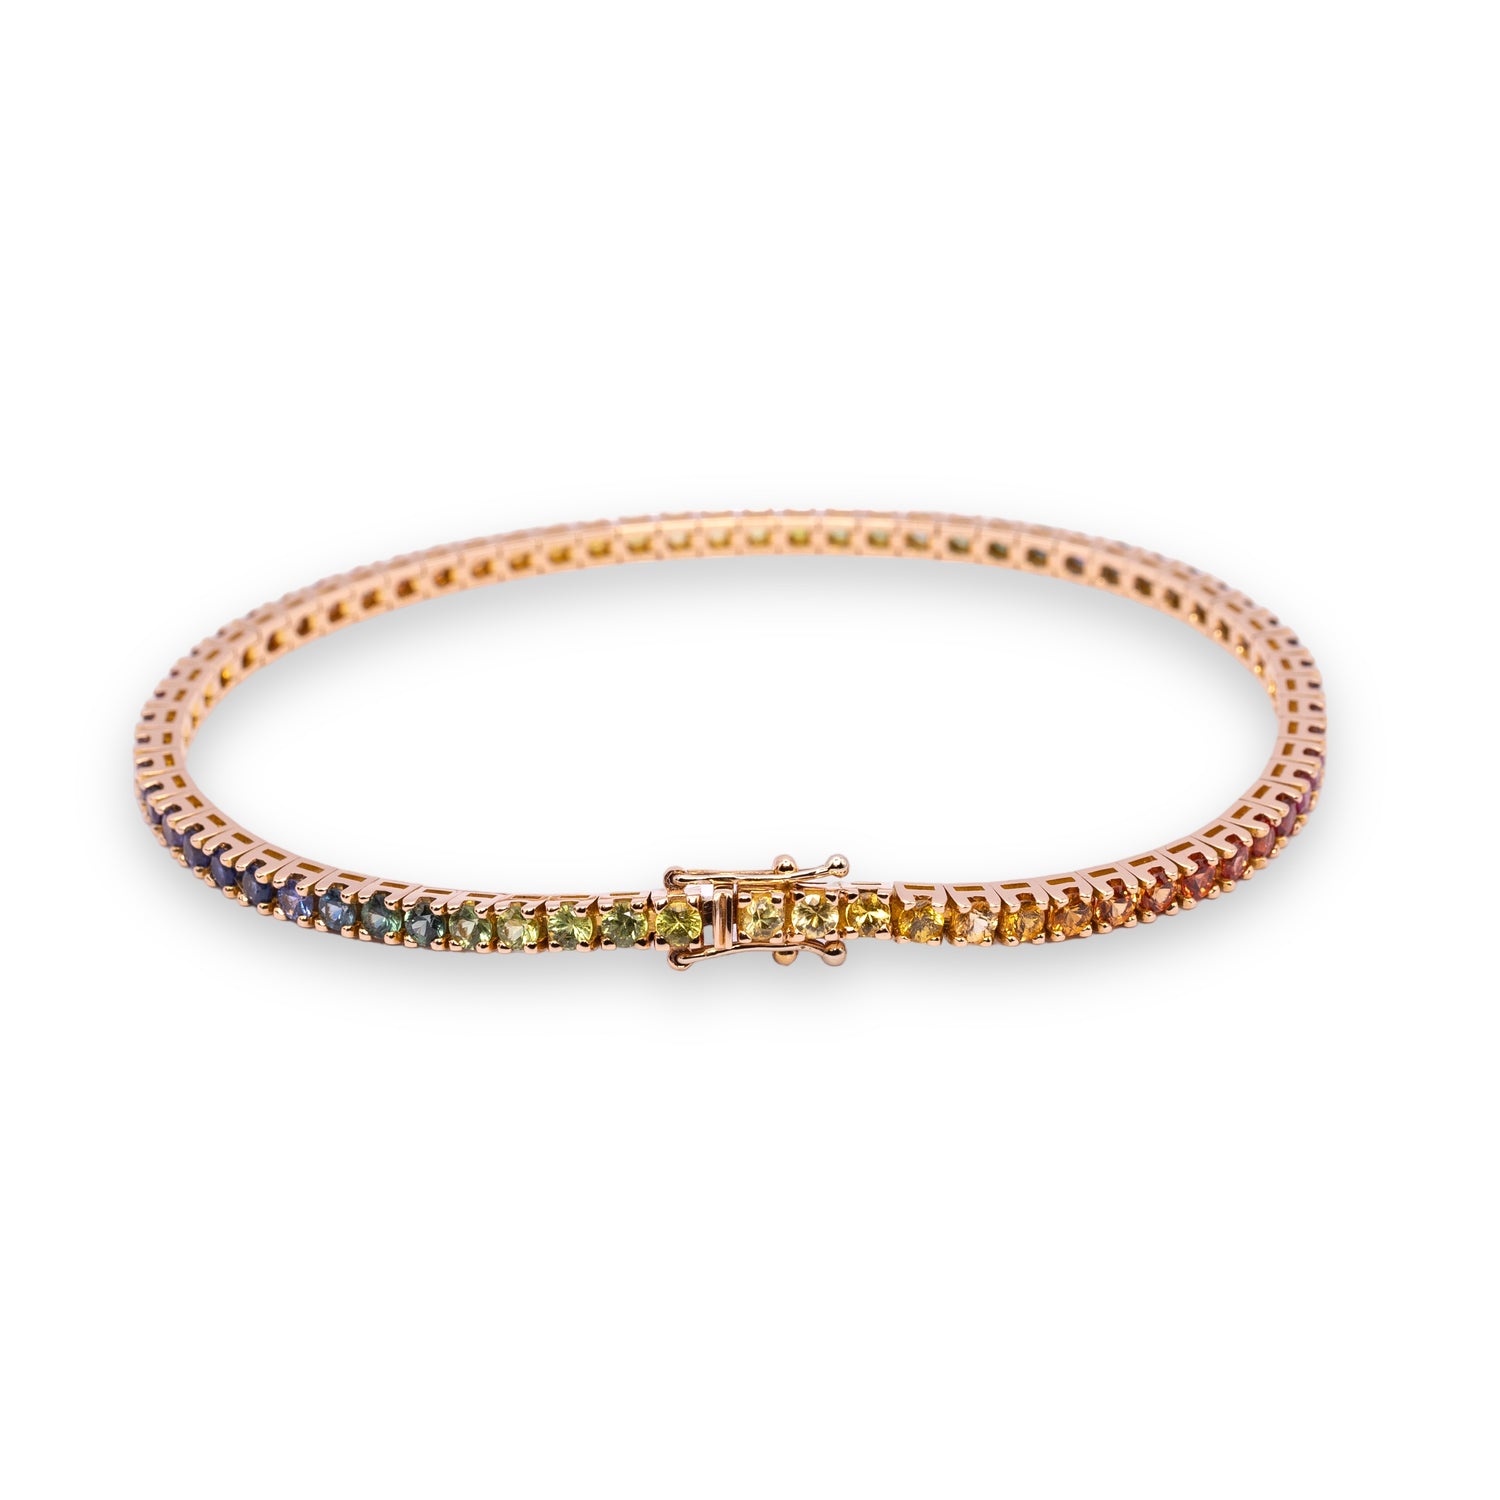 18K Gold Rainbow Bracelet - 2,00 ct Sapphires